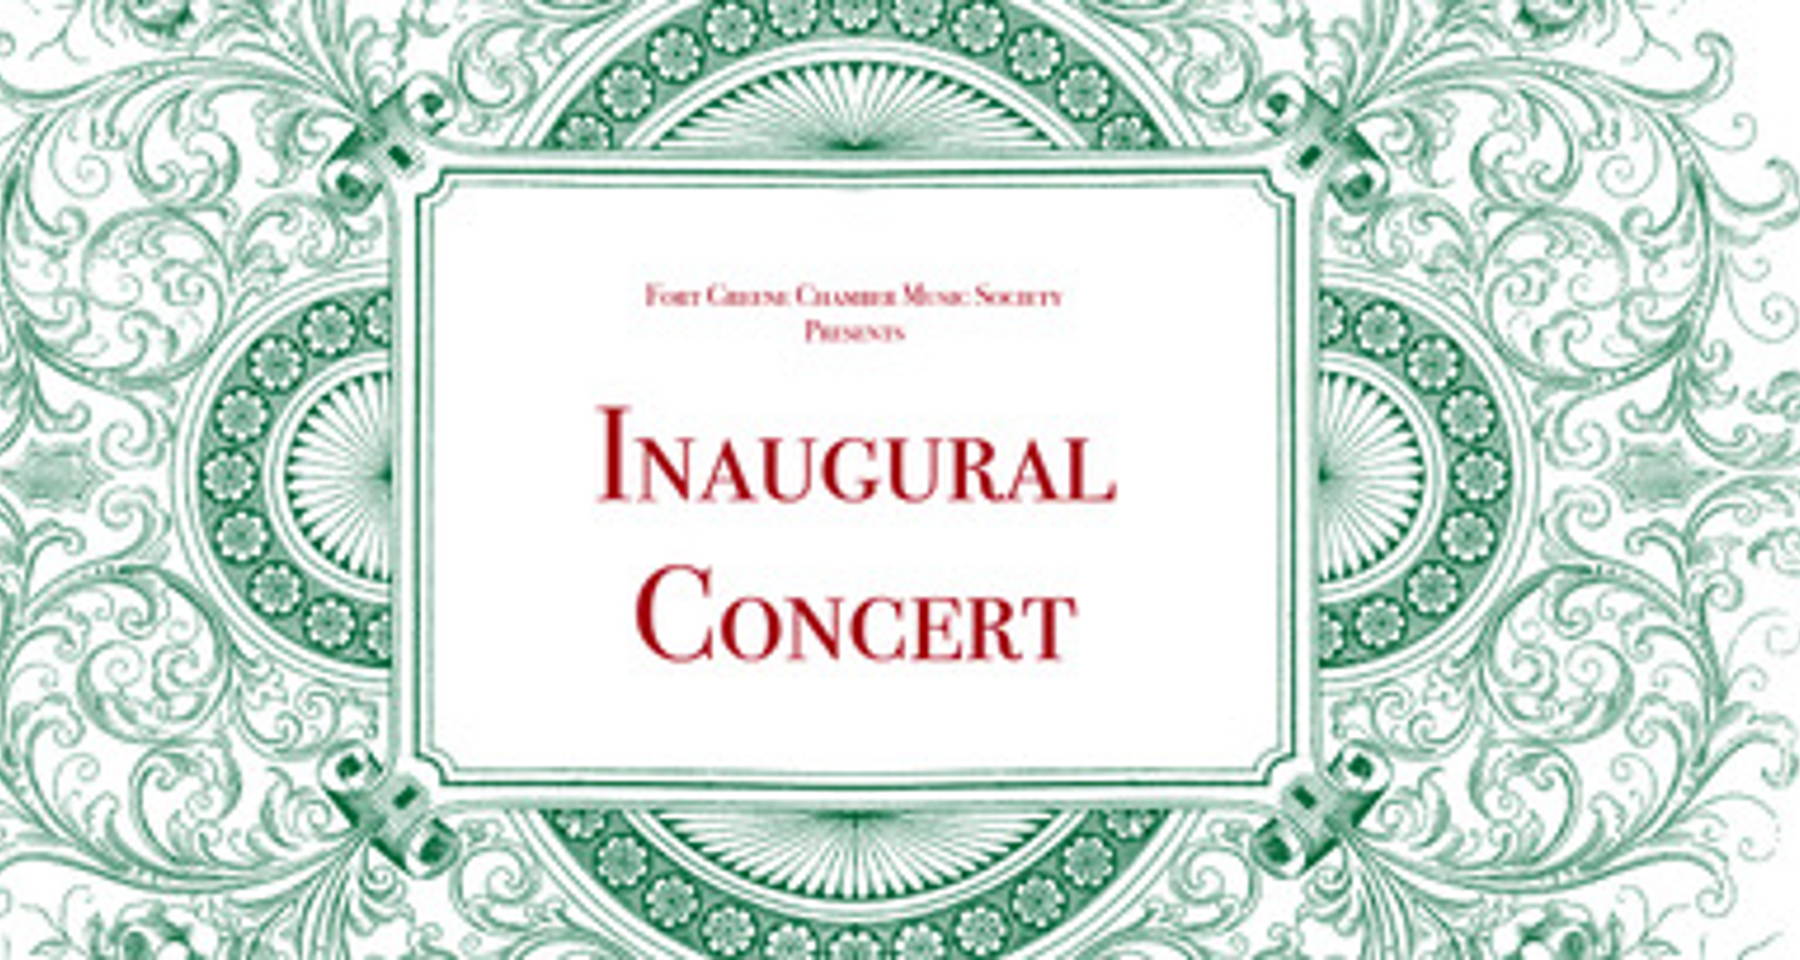 Fort Greene Chamber Music Society Presents: Beethoven, Schubert, Mendelssohn, and Bach!